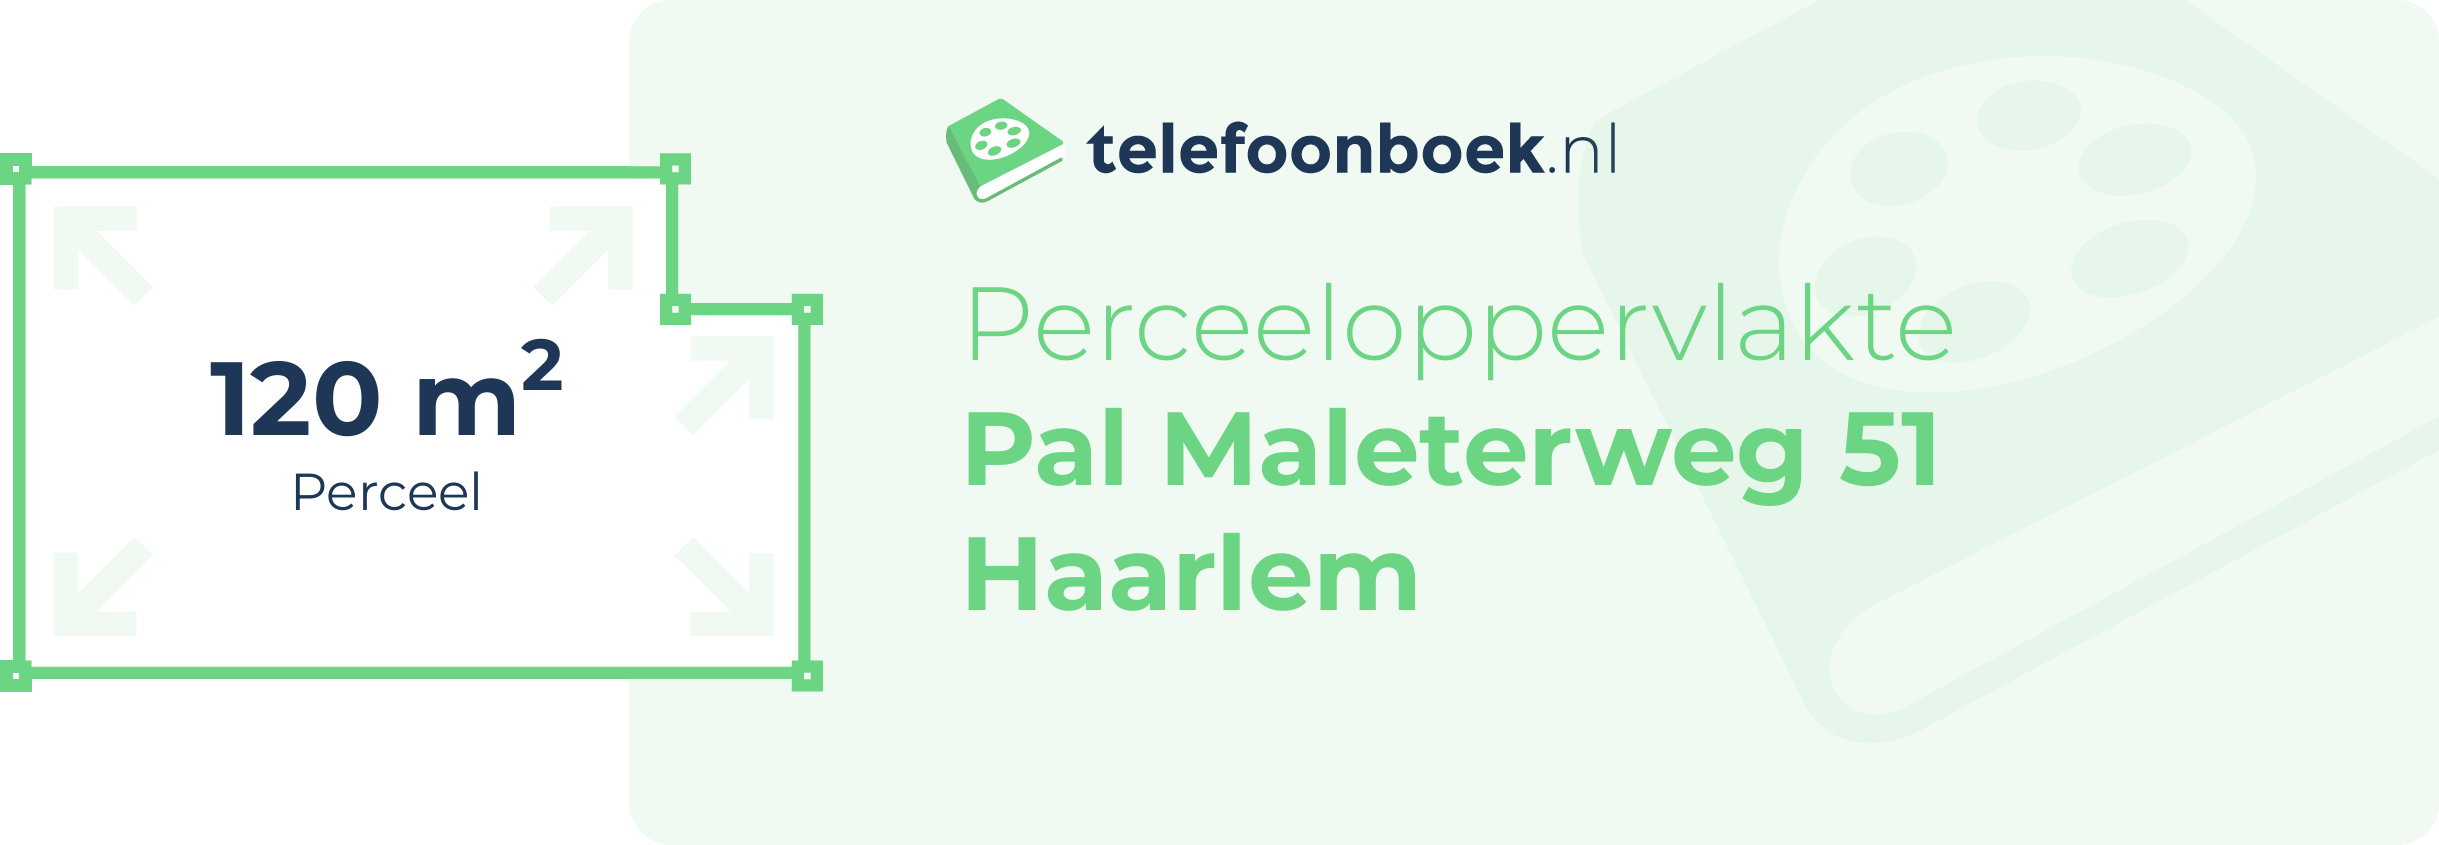 Perceeloppervlakte Pal Maleterweg 51 Haarlem